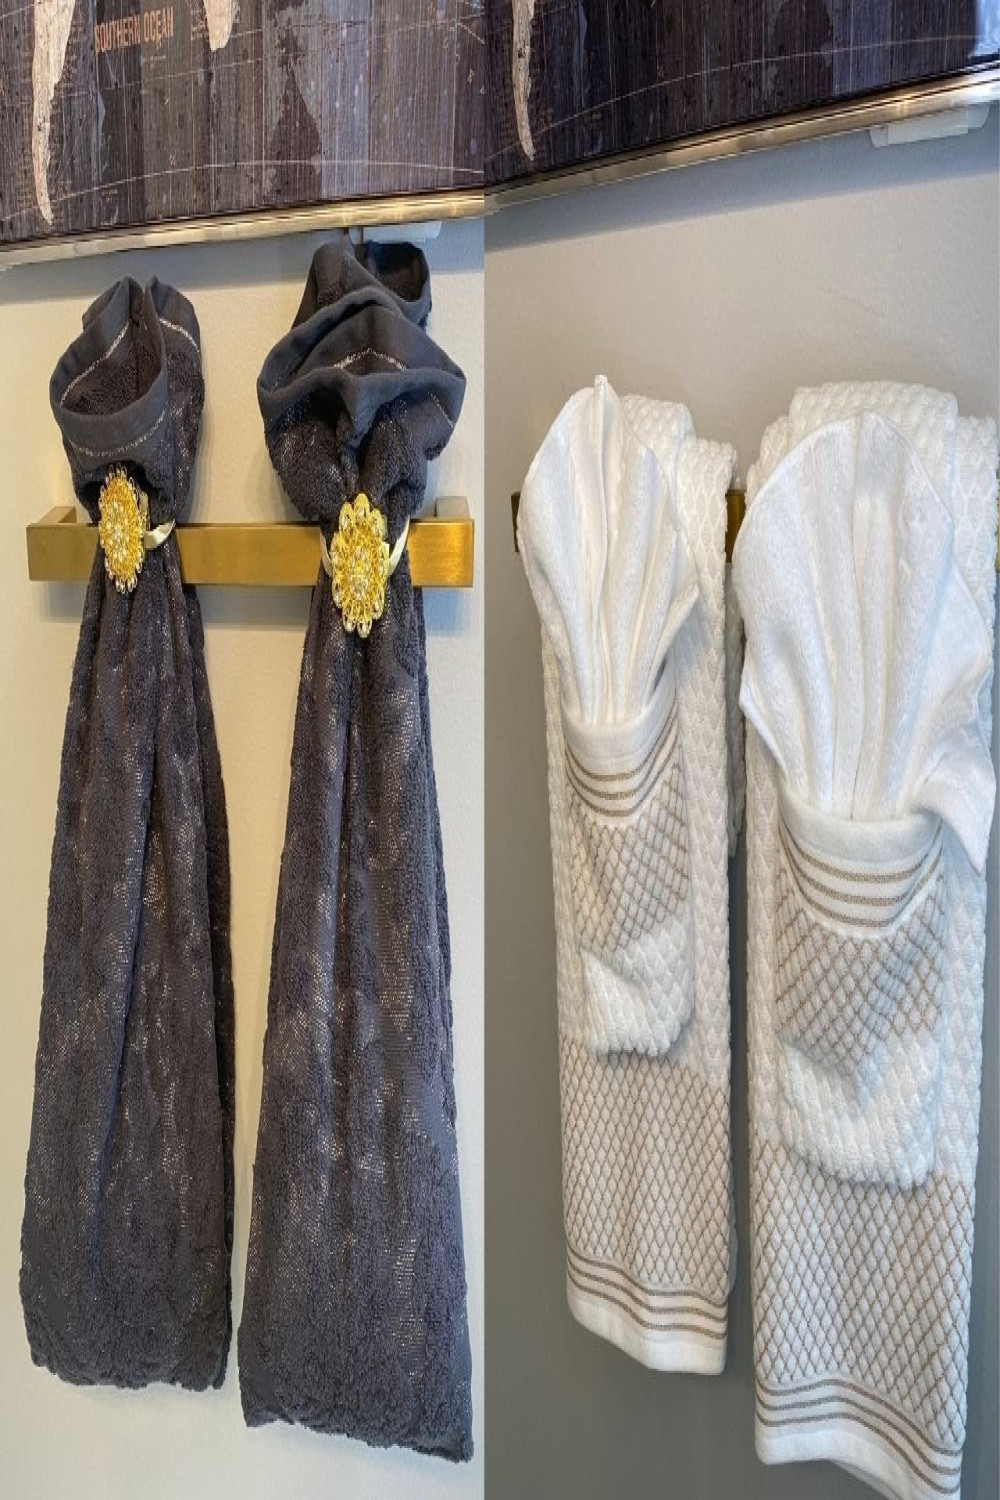 BATHROOM DECORATING IDEAS // Towel Folding Ideas for Bathroom // How to  Fold Decorative Towels